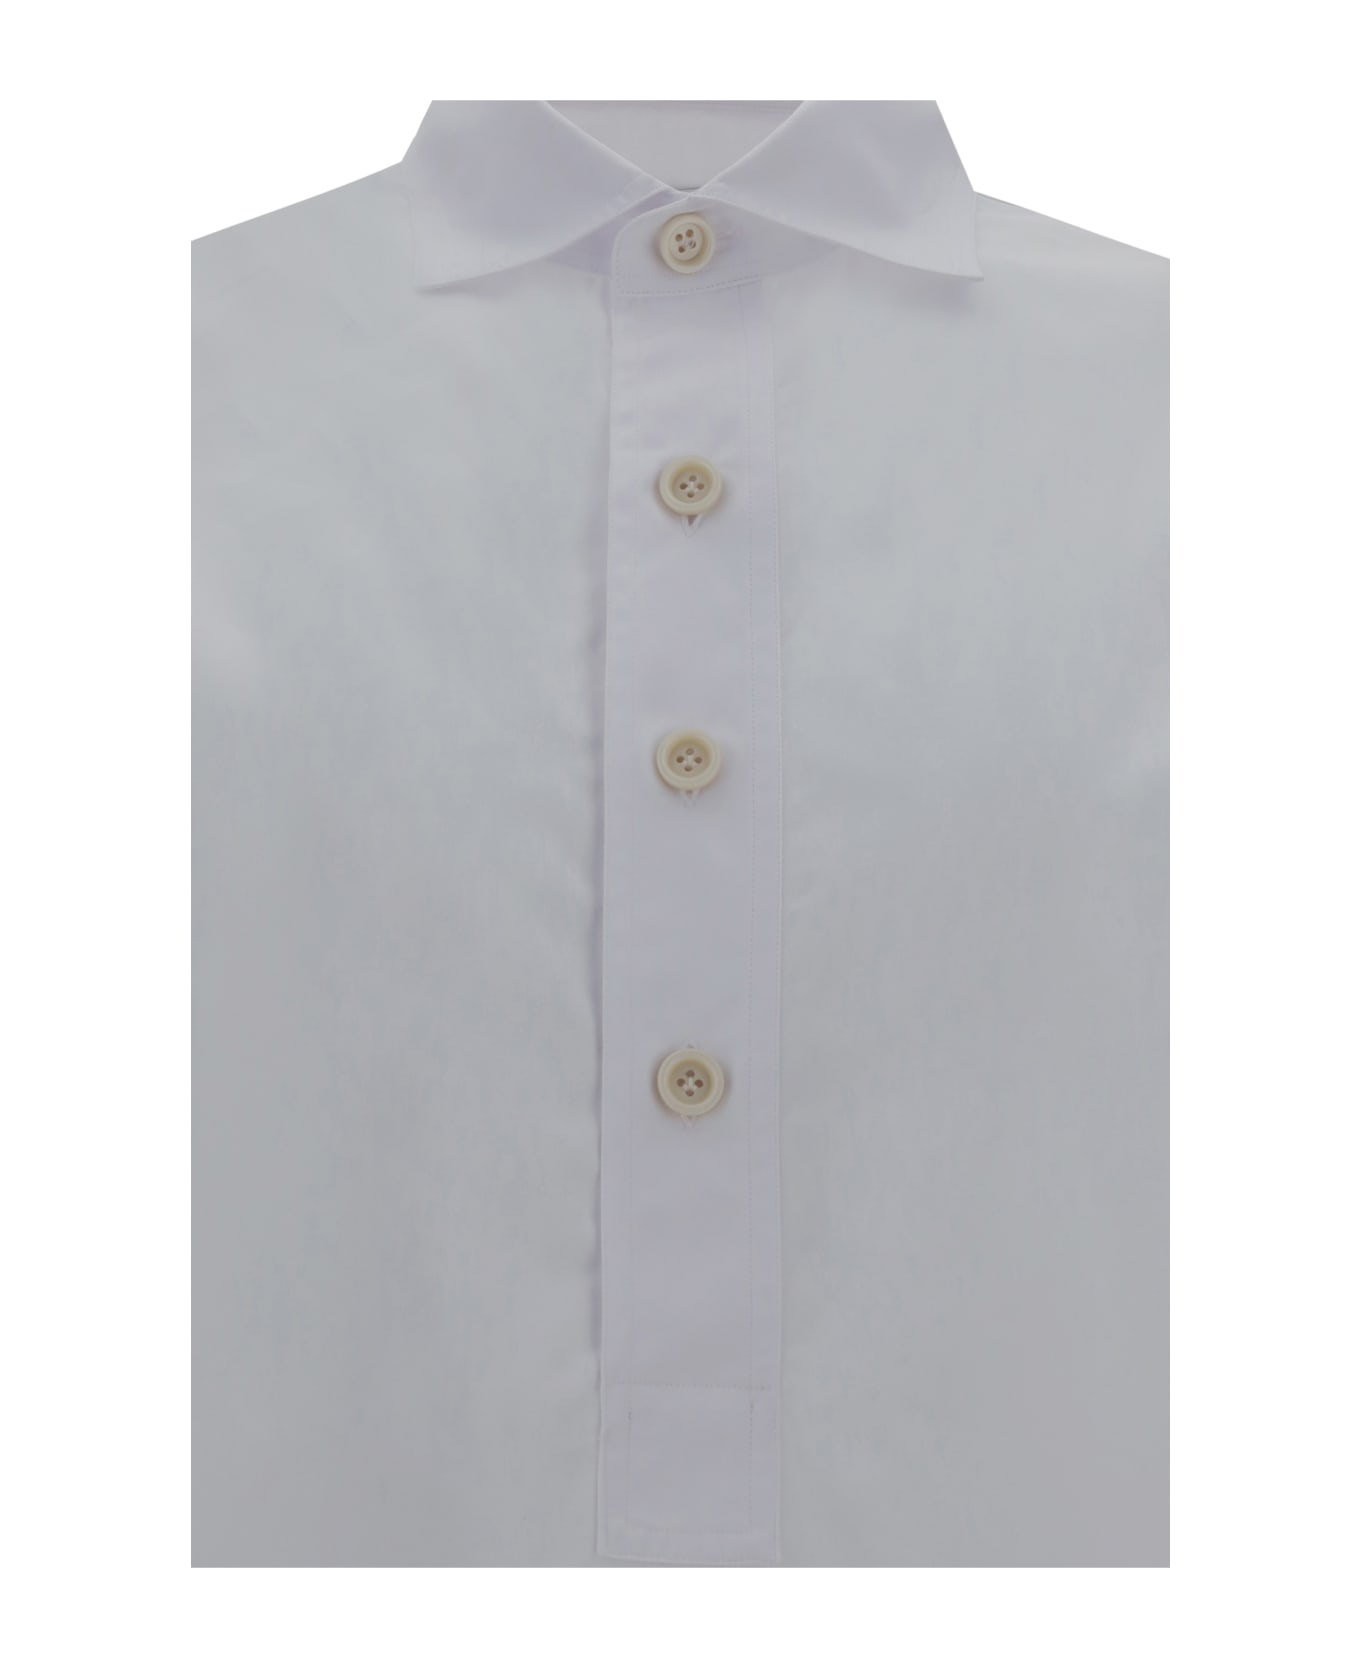 Lardini Shirt - White